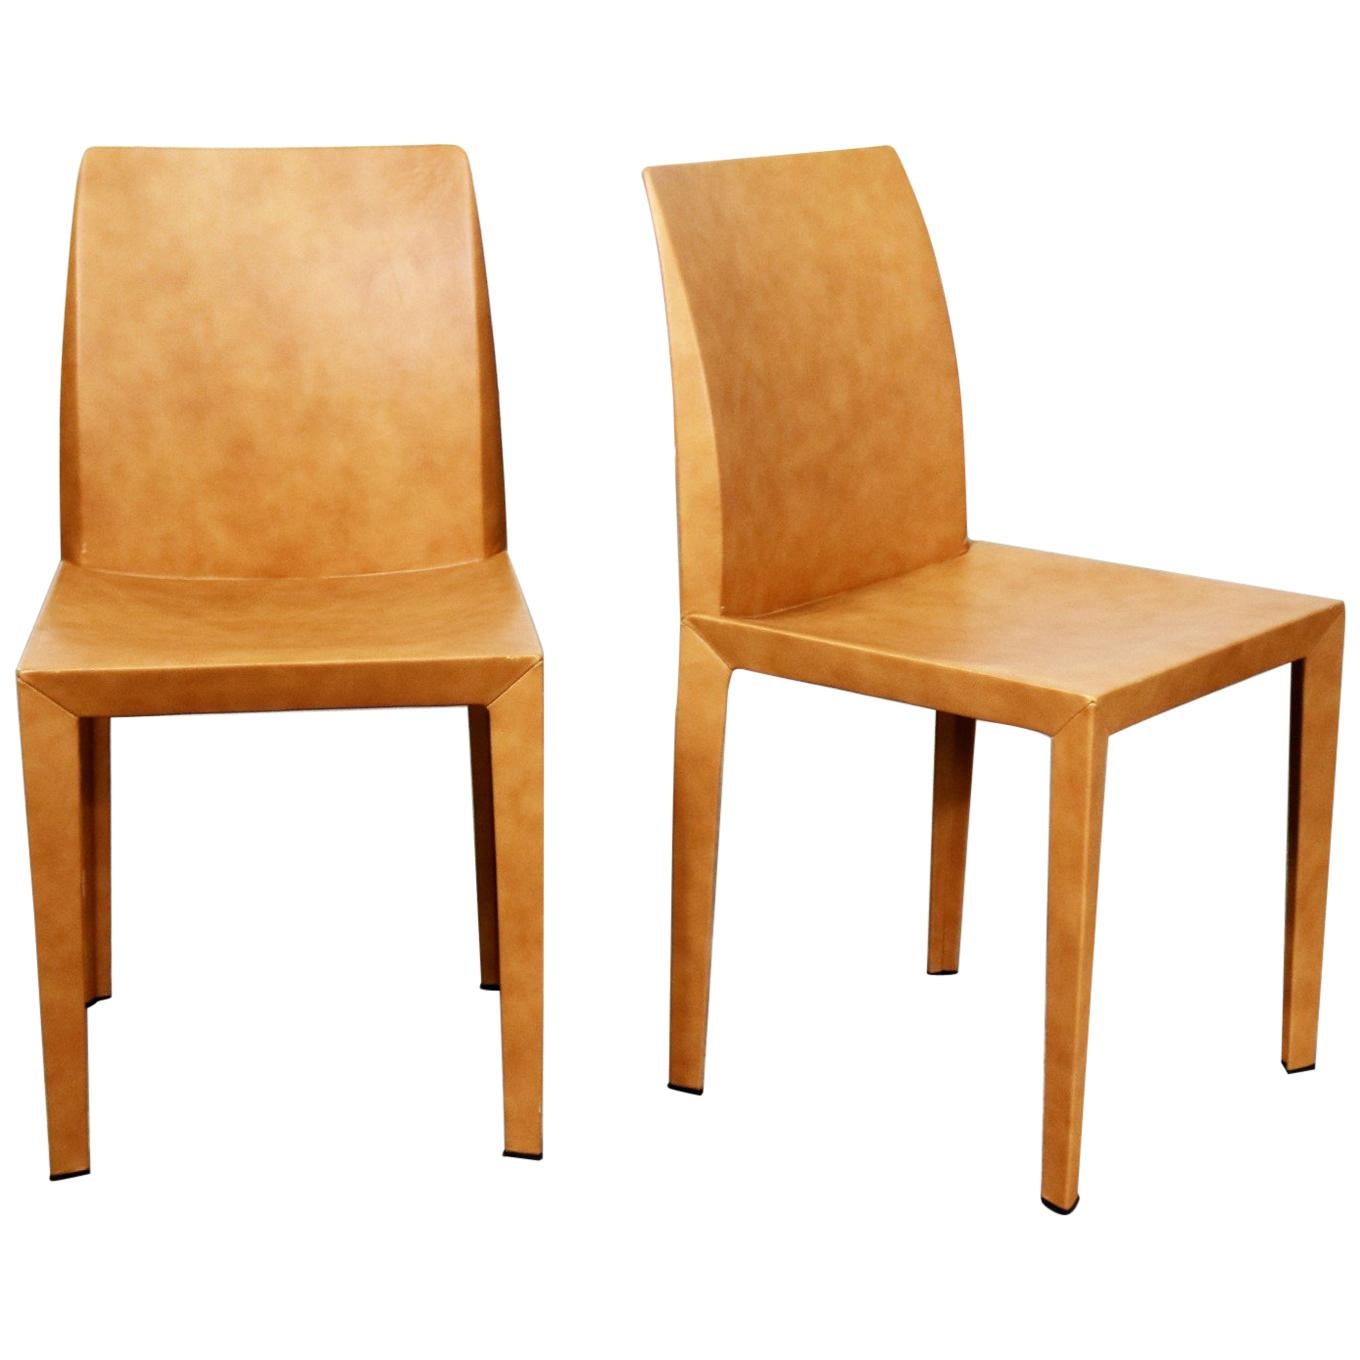 Pair of Poltrona Frau Lola Dining Side Chairs by Pierluigi Cerri Cognac Leather